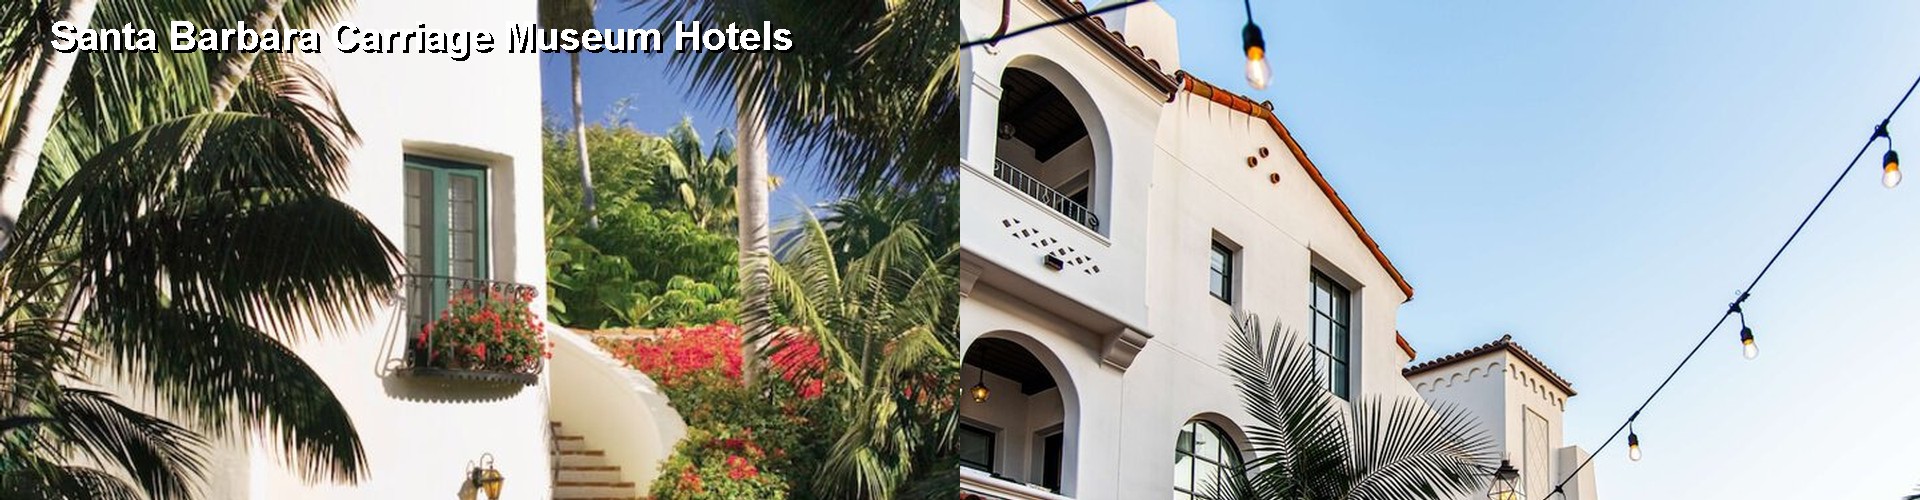 5 Best Hotels near Santa Barbara Carriage Museum